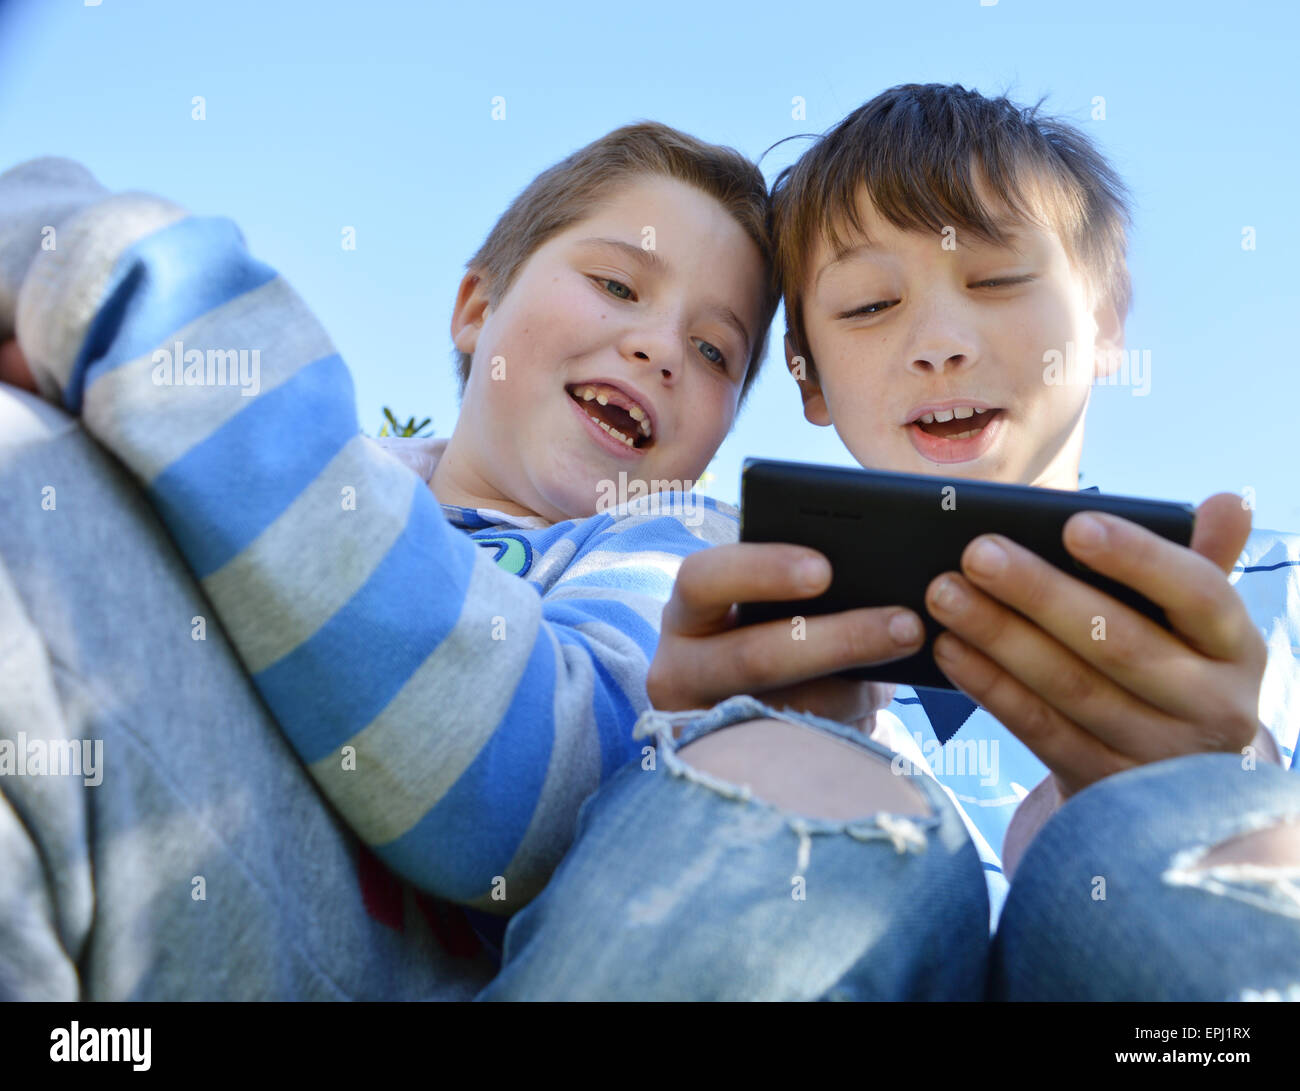 kids with smartphone Stock Photo